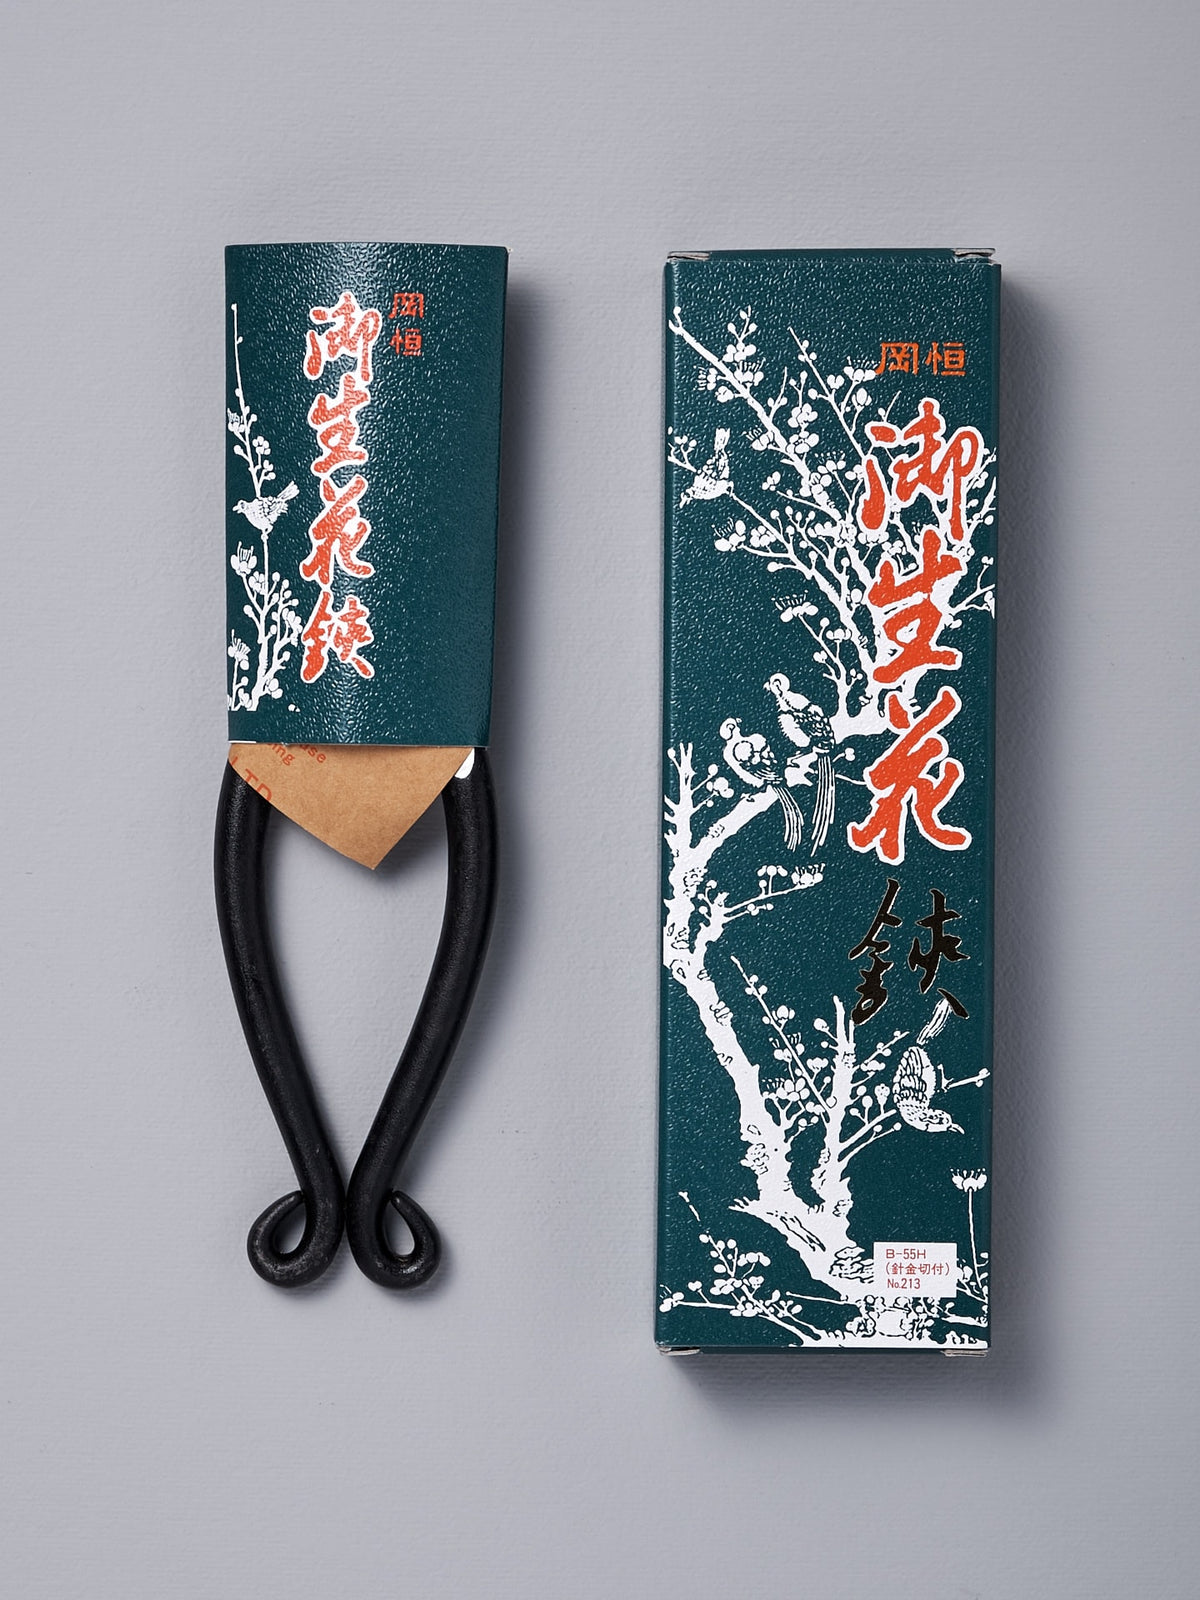 A box with an Ikebana Scissors №213 and Okatsune Chinese writing on it.